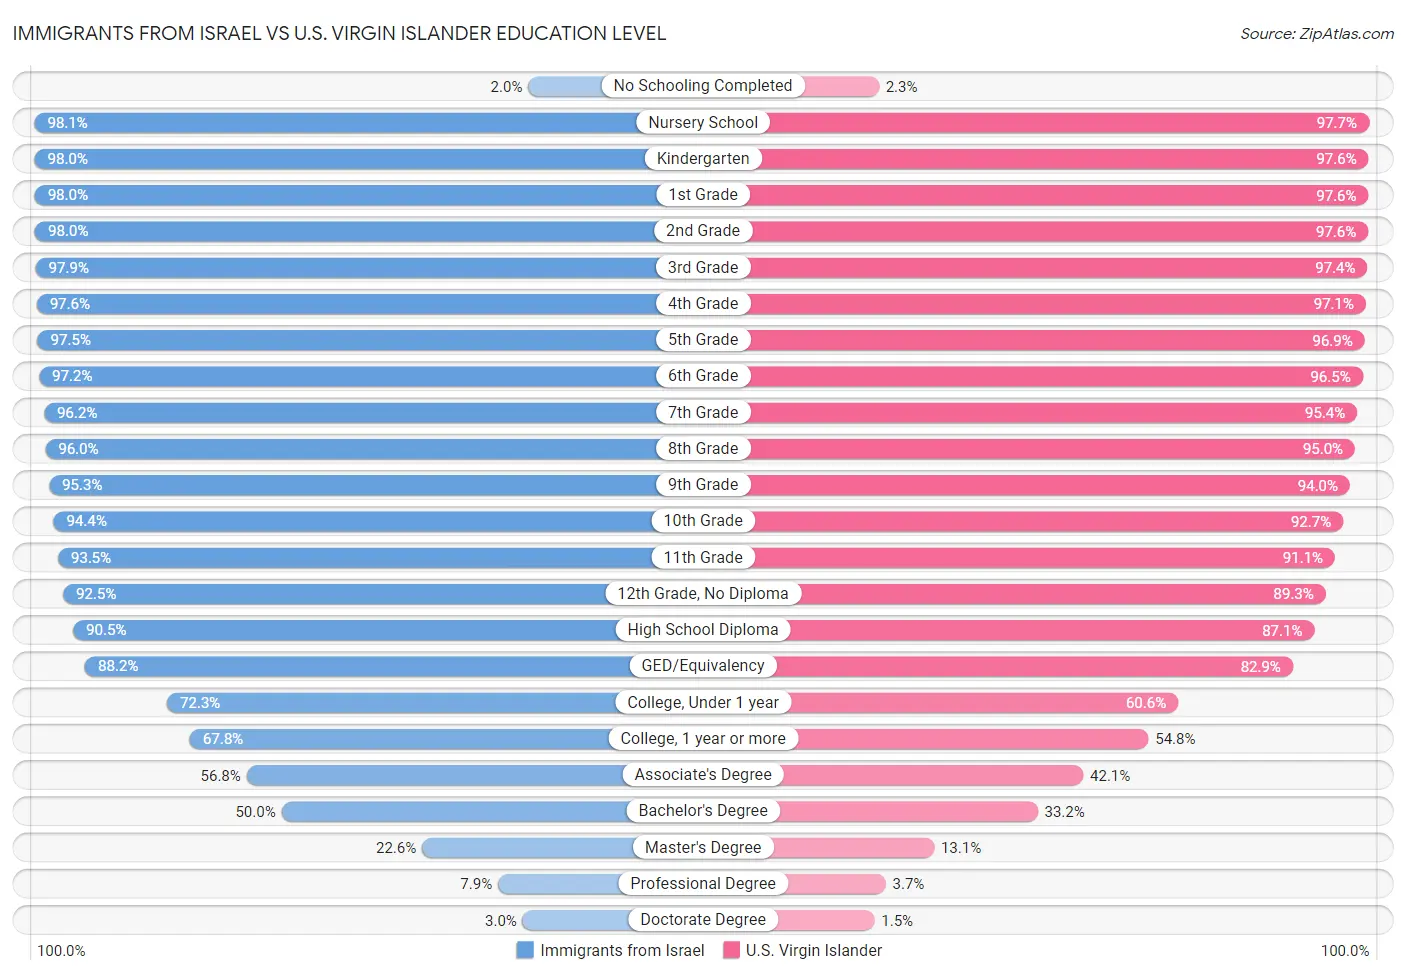 Immigrants from Israel vs U.S. Virgin Islander Education Level